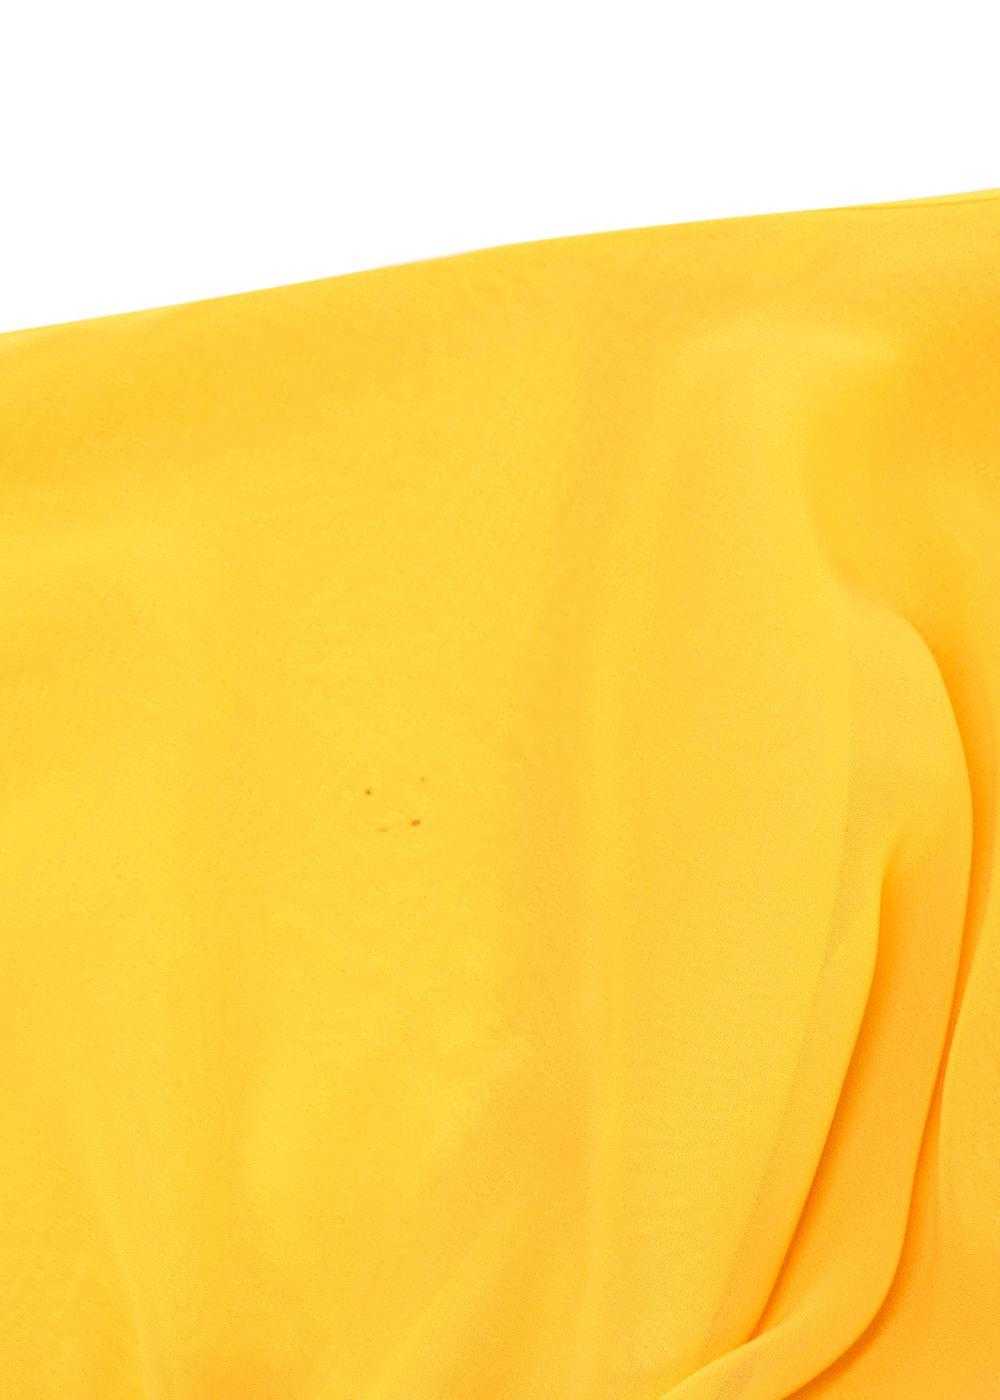 Honayda Honayda Yellow Asymmetric Ruffled Gown - image 6